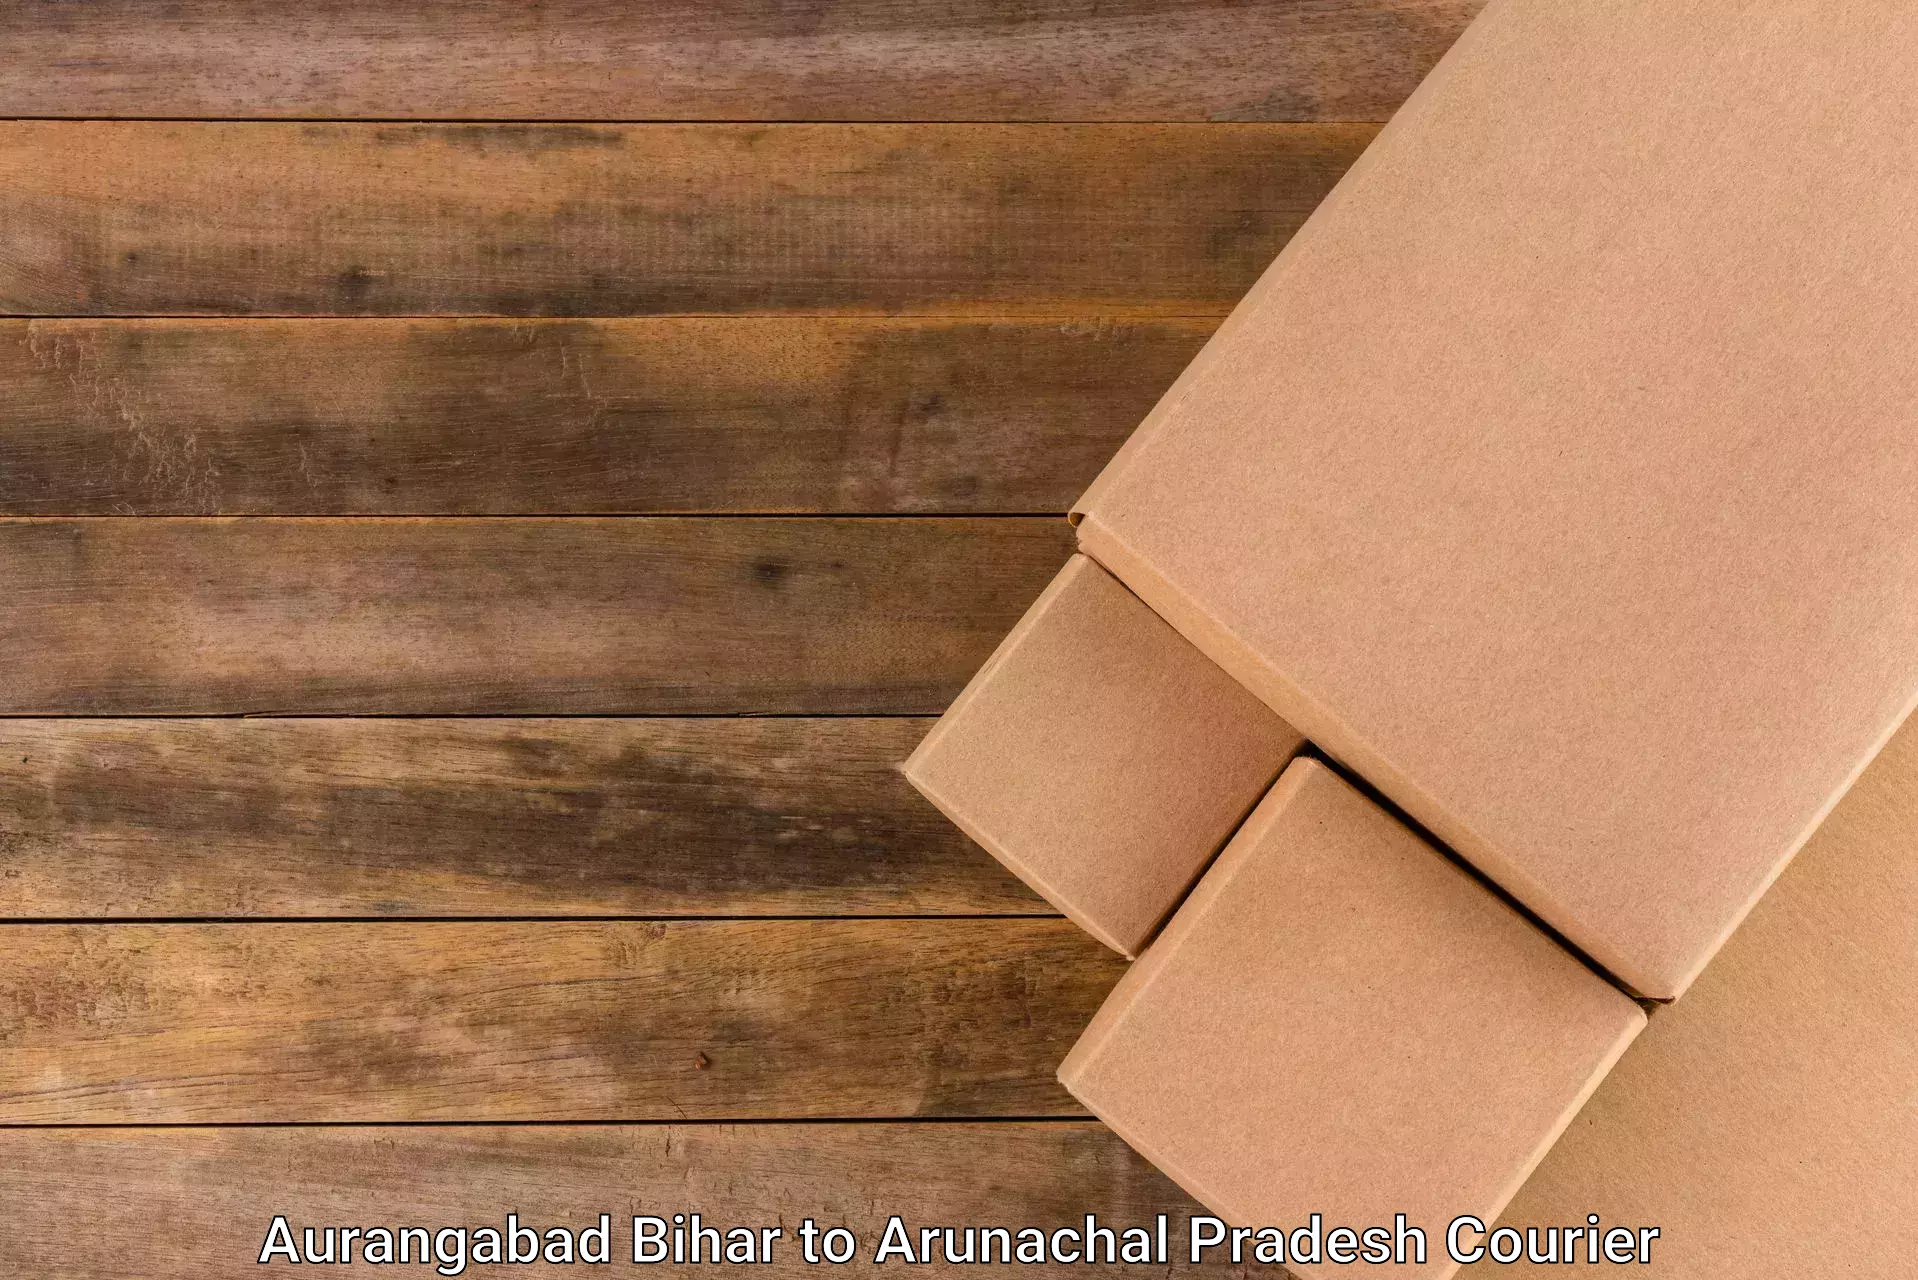 High-speed parcel service Aurangabad Bihar to East Siang